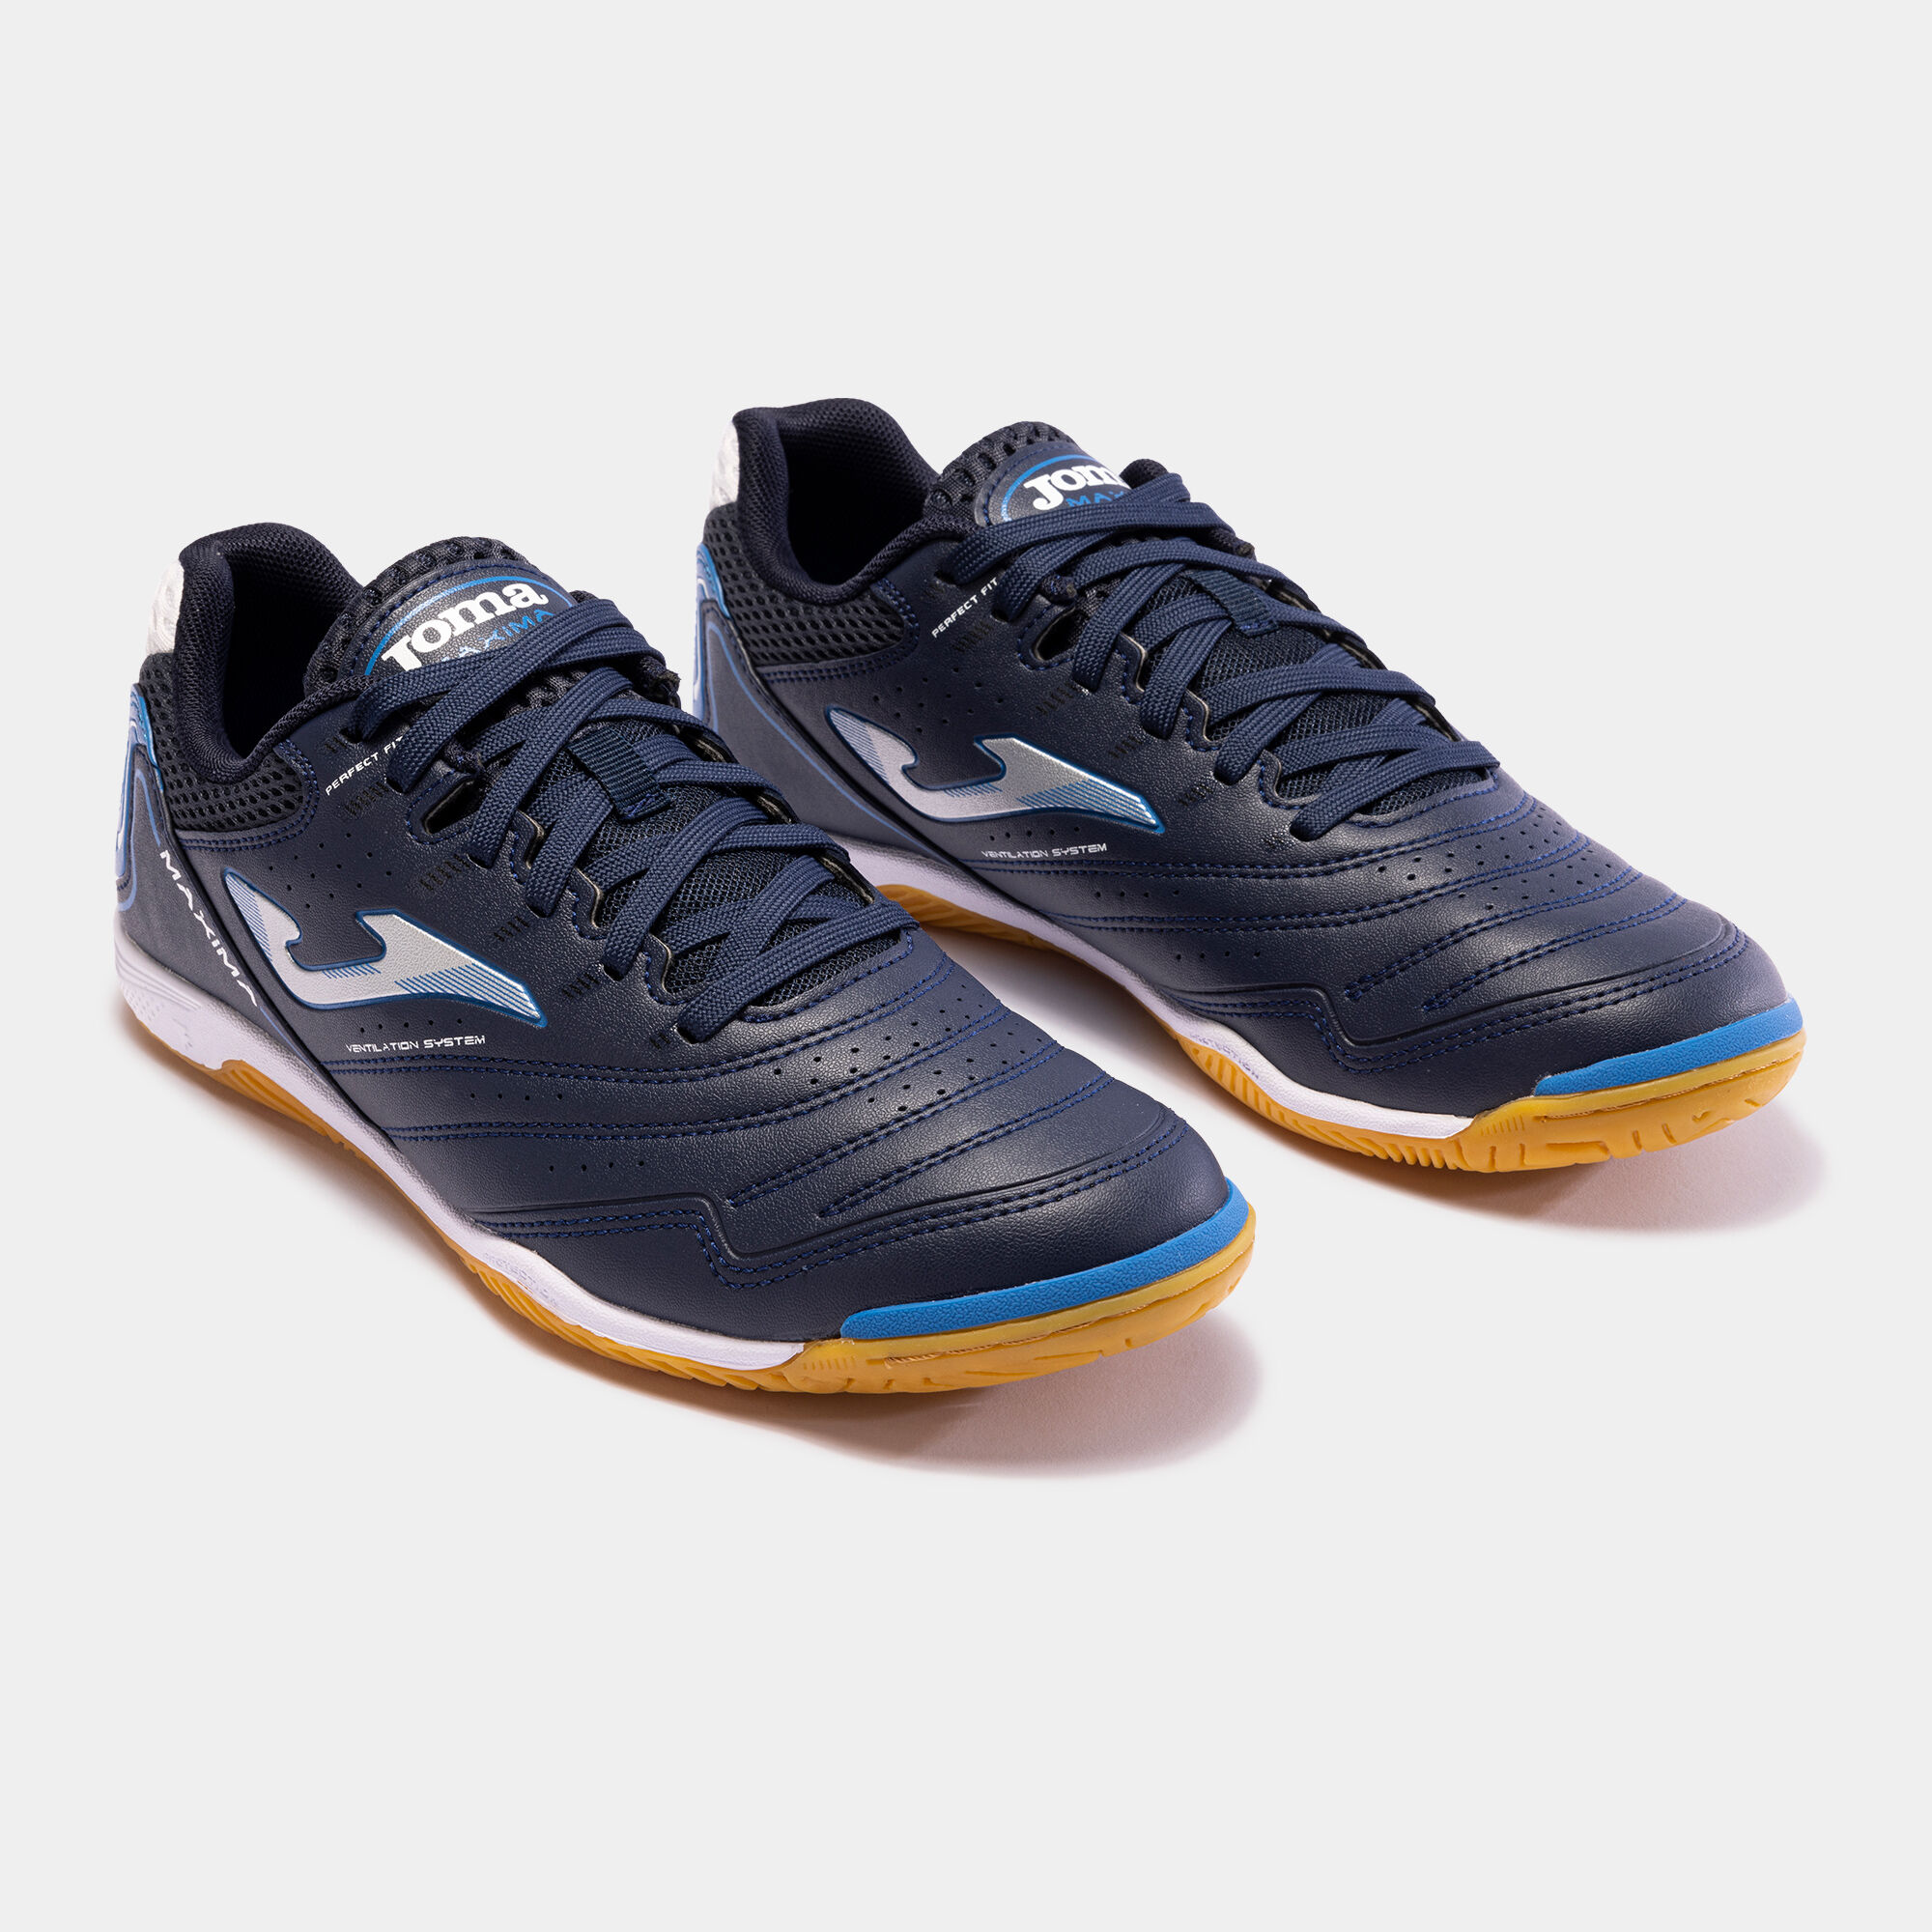 Chaussures futsal Maxima 23 indoor bleu marine bleu roi